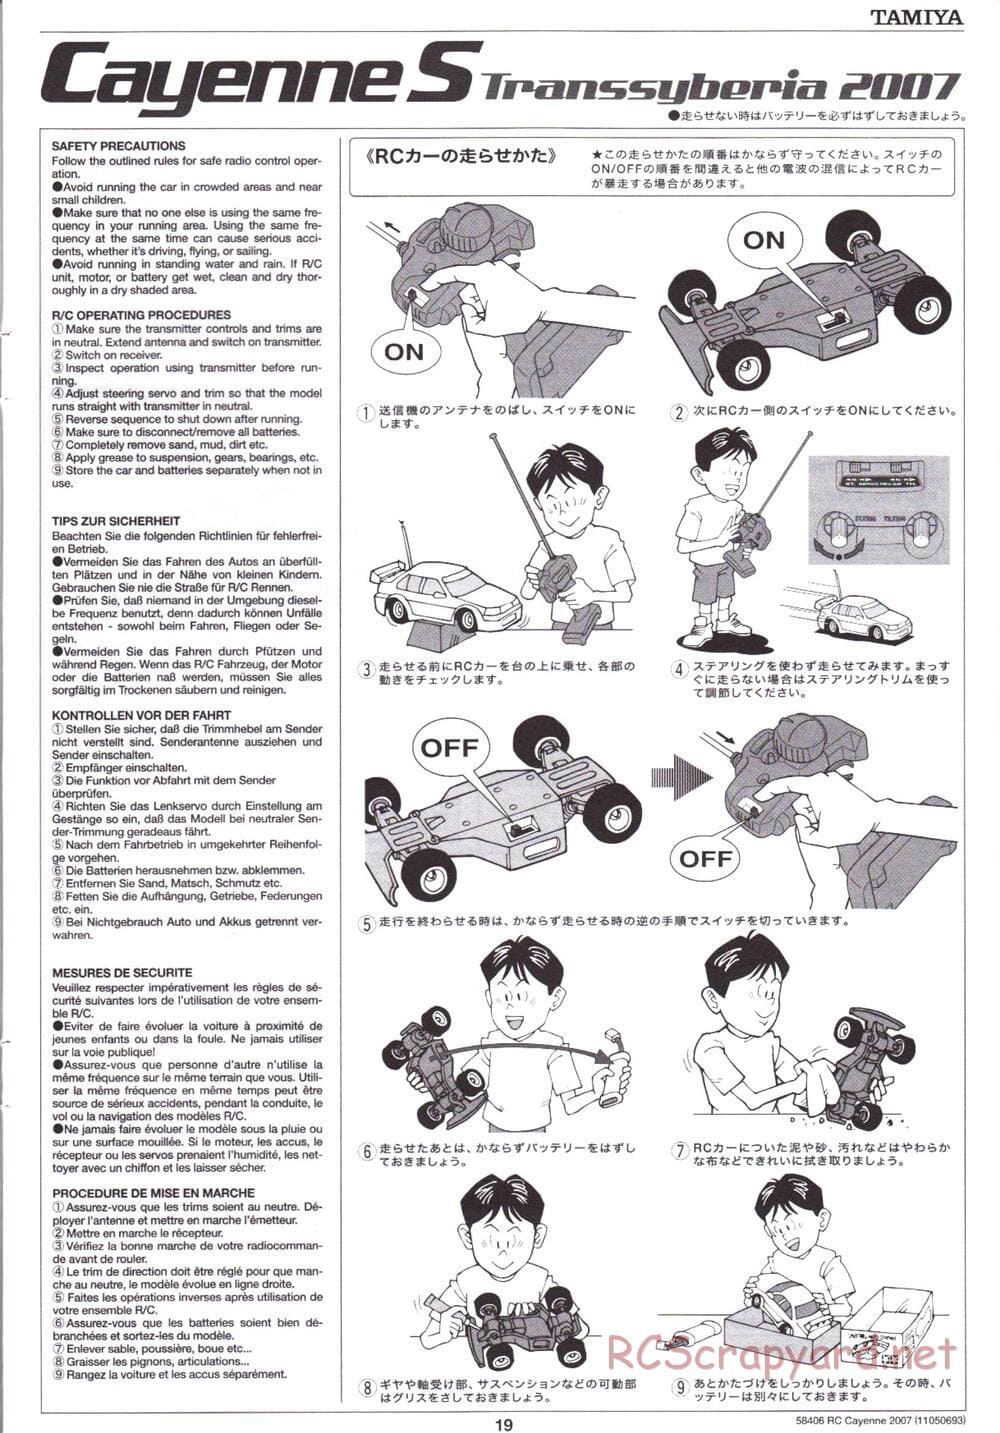 Tamiya - Cayenne S Transsyberia 2007 Chassis - Manual - Page 19